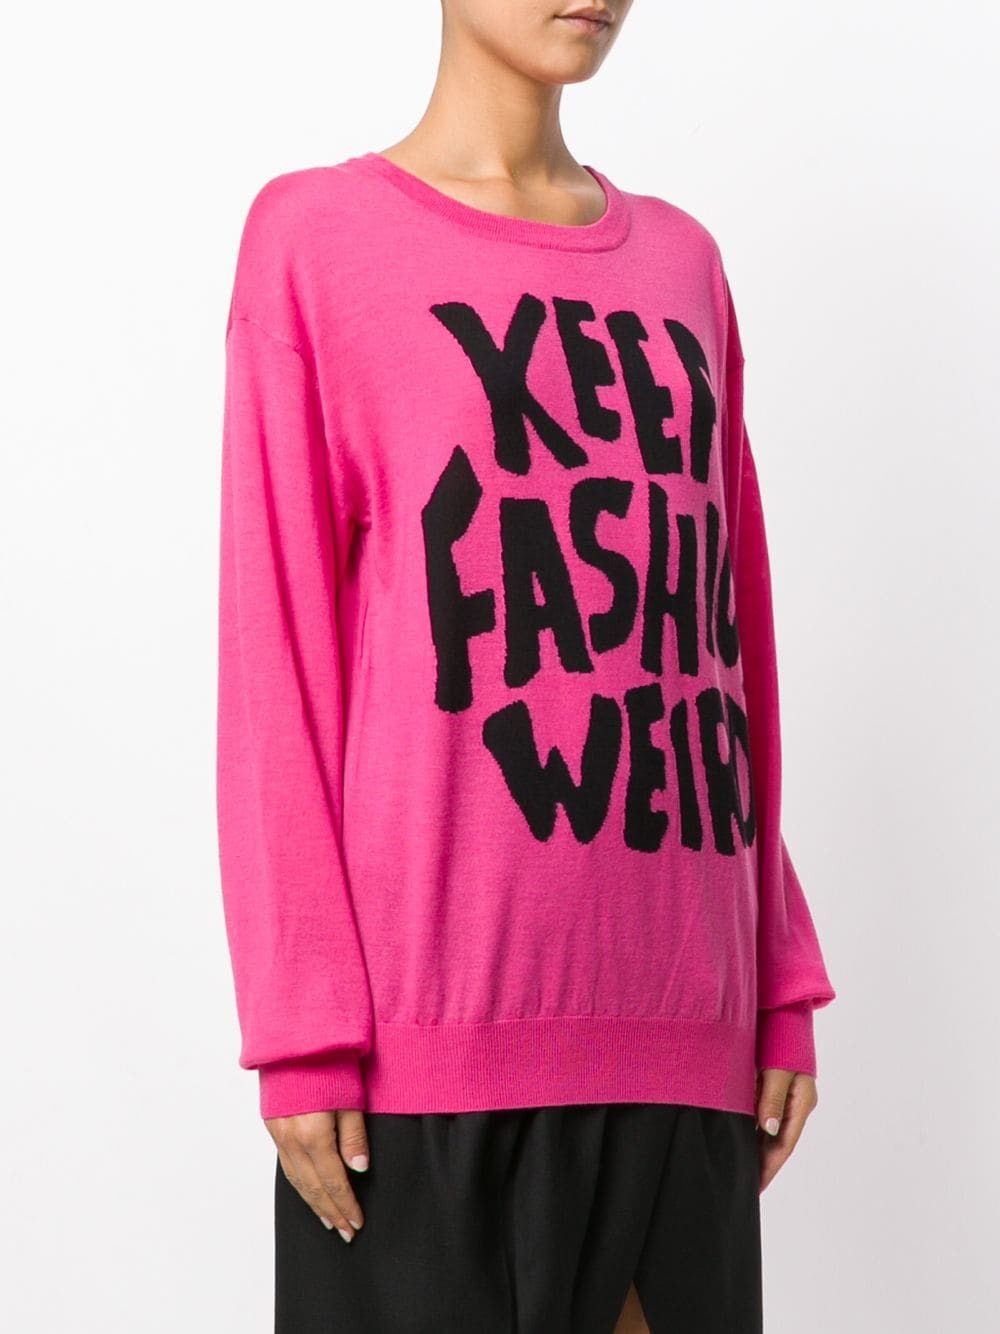 Jeremy Scott Keep Fashion Weird Jumper, $423 | farfetch.com | Lookastic